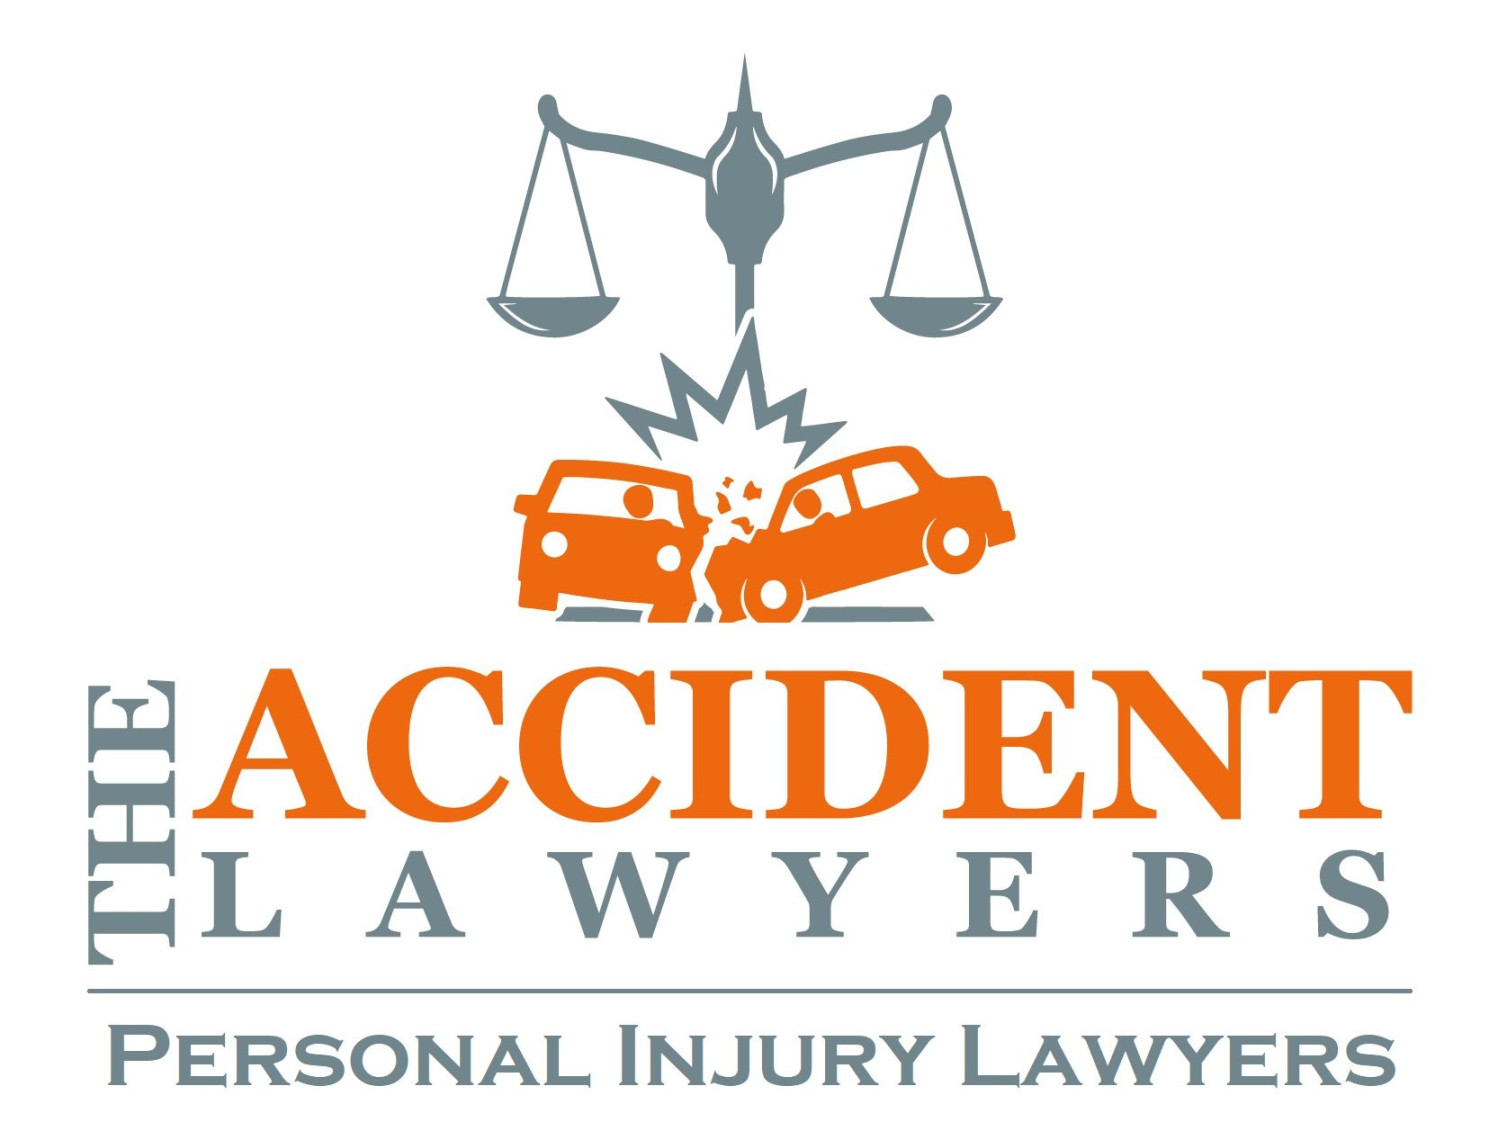 Personal Injury Law Firm Calgary, AB